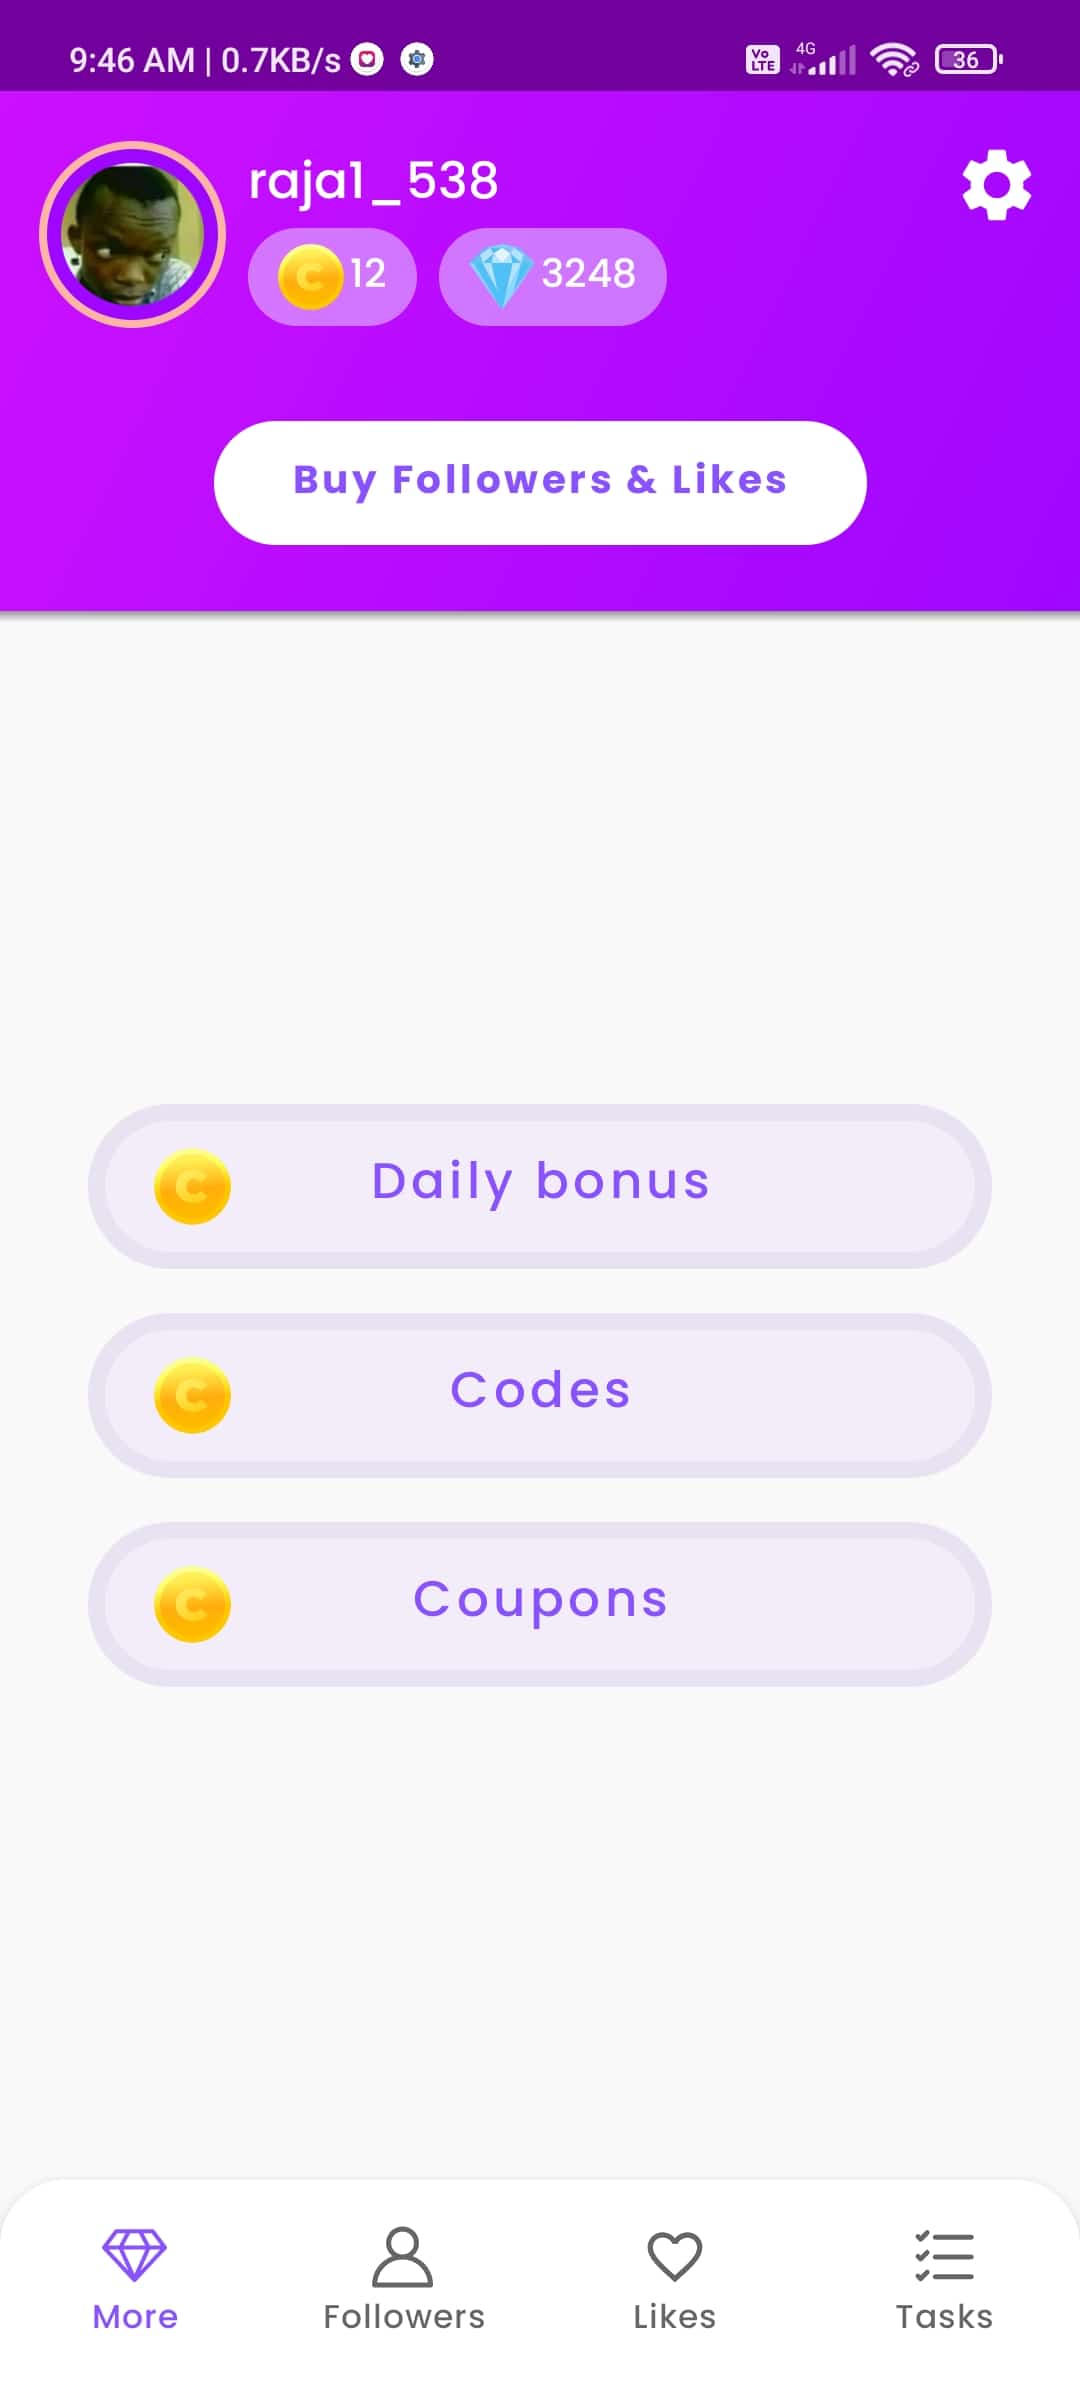 Top follow coupon code today referral code list 1000 coin